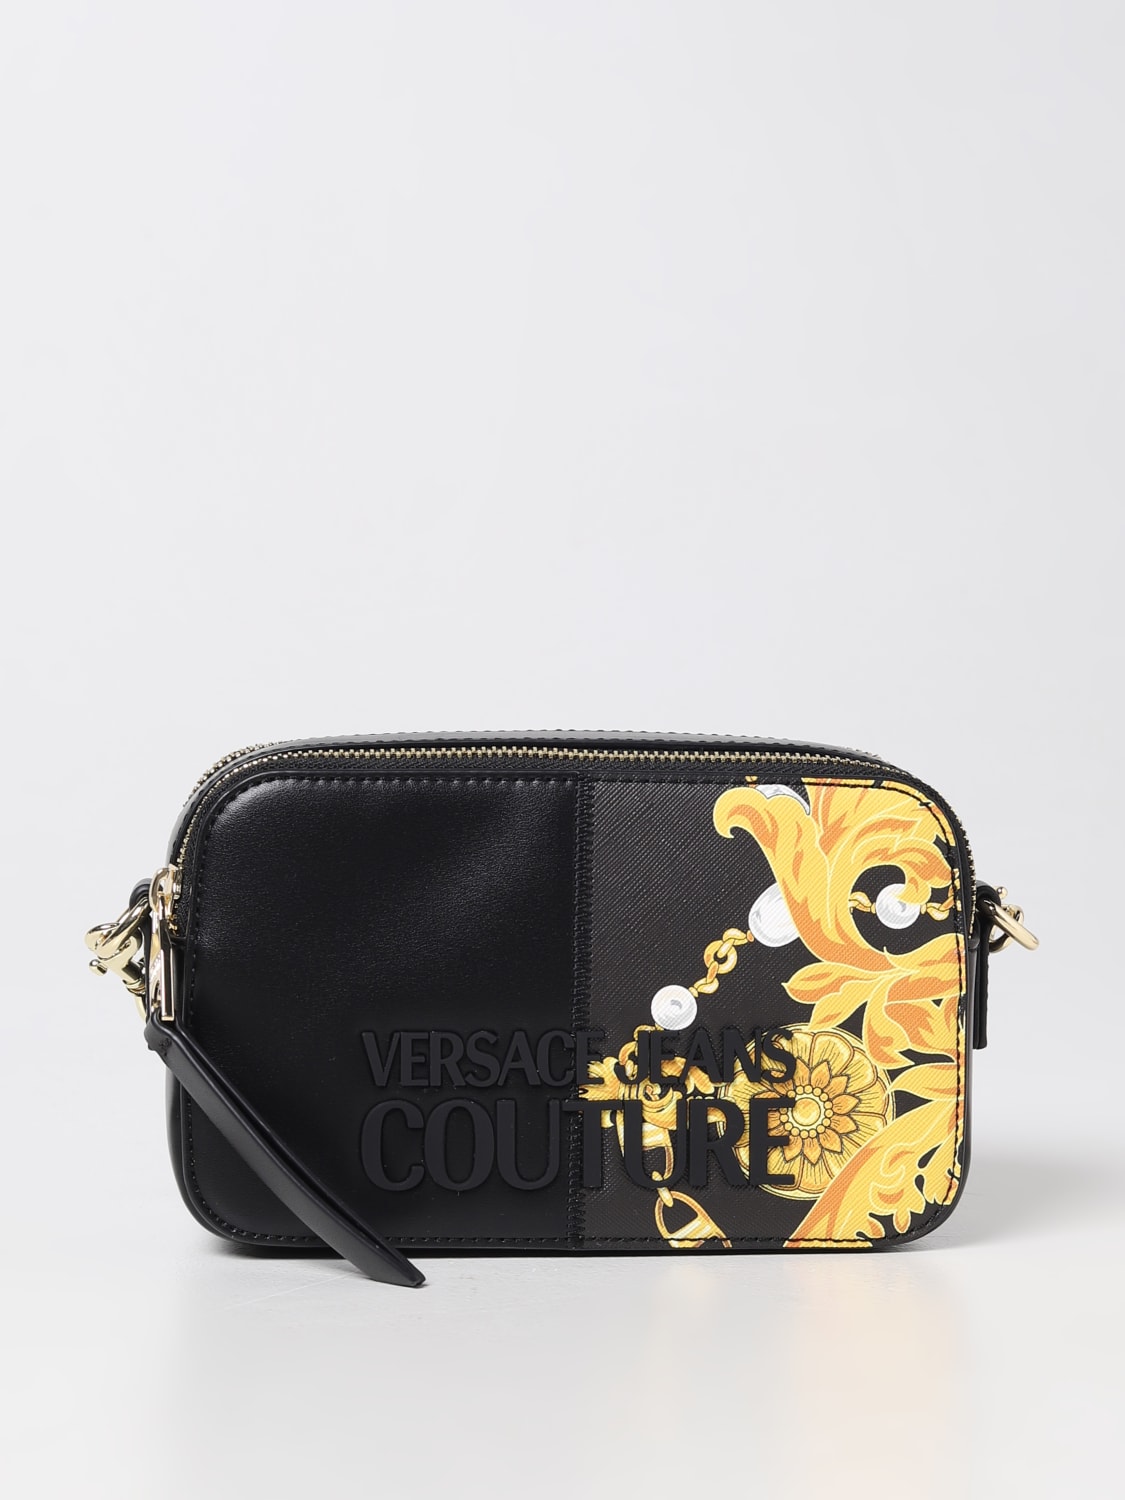 Versace Jeans Couture Chiara Ferragni Bag